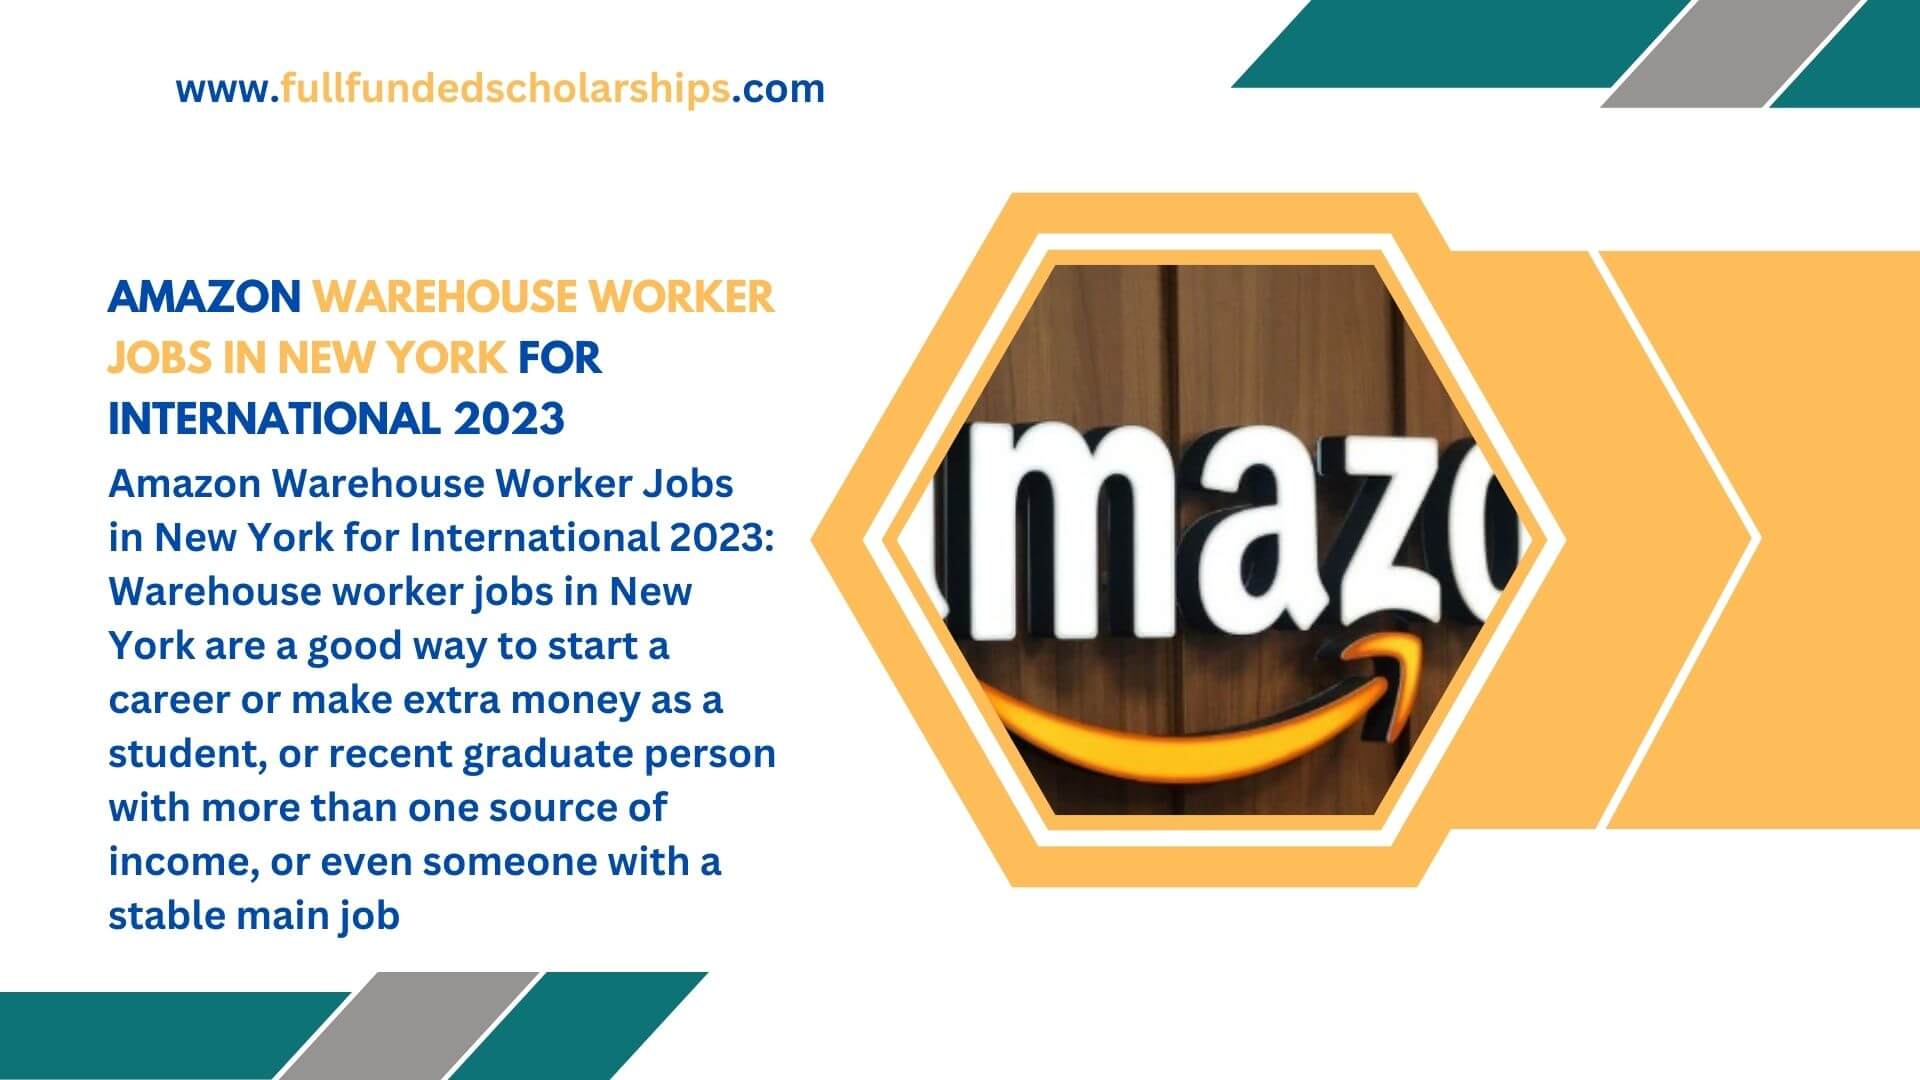 Amazon Warehouse Worker Jobs in New York for International 2023